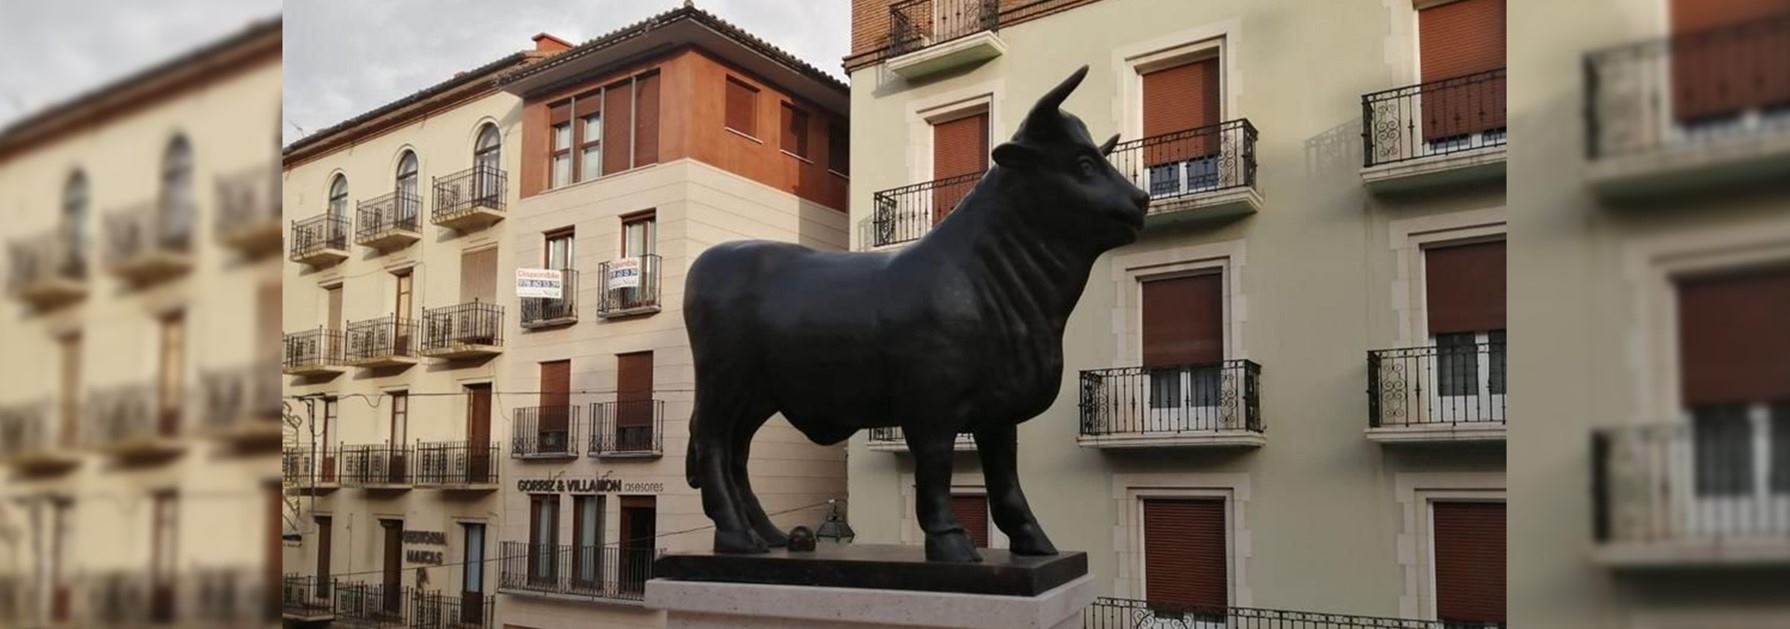 Torico de Teruel